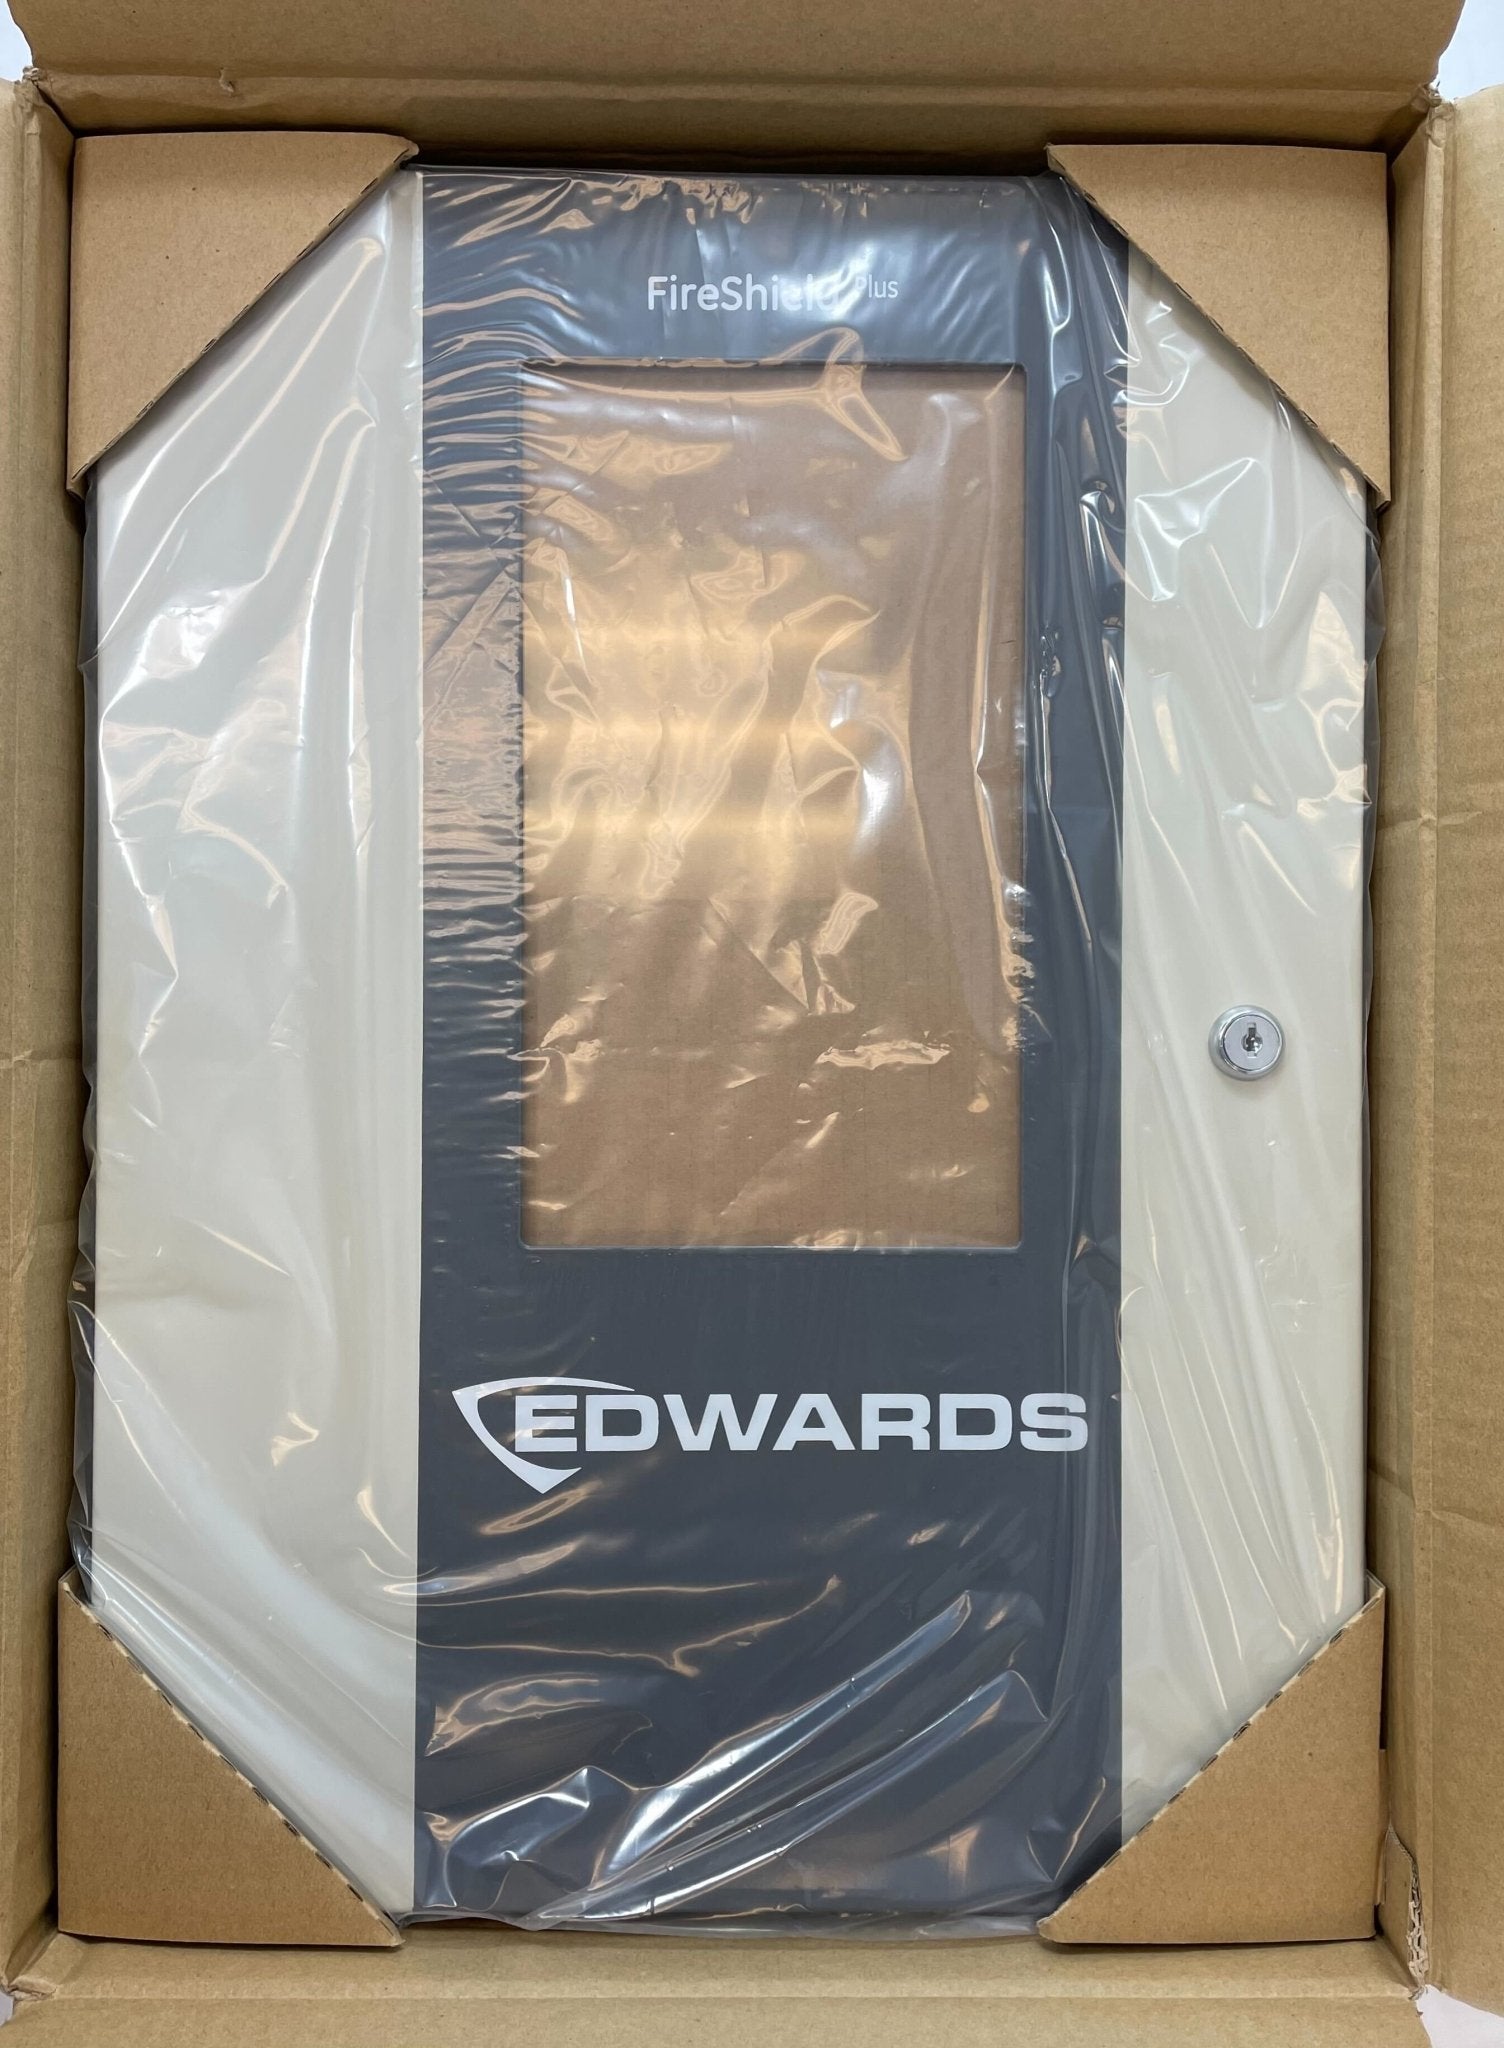 Edwards FSP502GD - The Fire Alarm Supplier